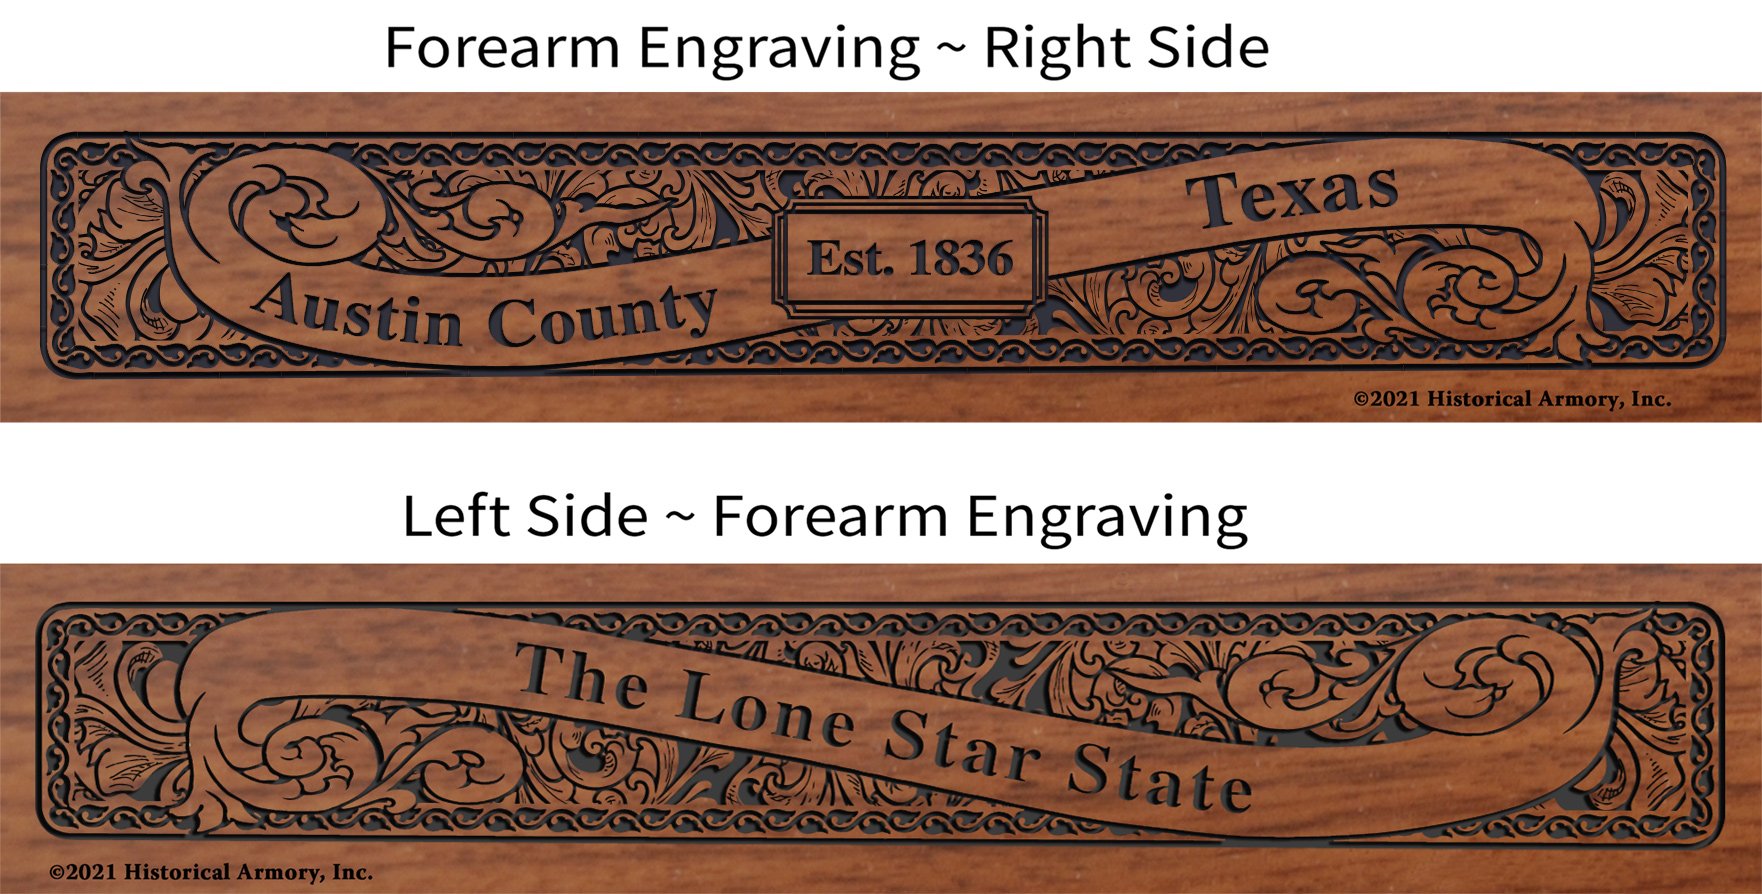 Austin County Texas Establishment and Motto History Engraved Rifle Forearm